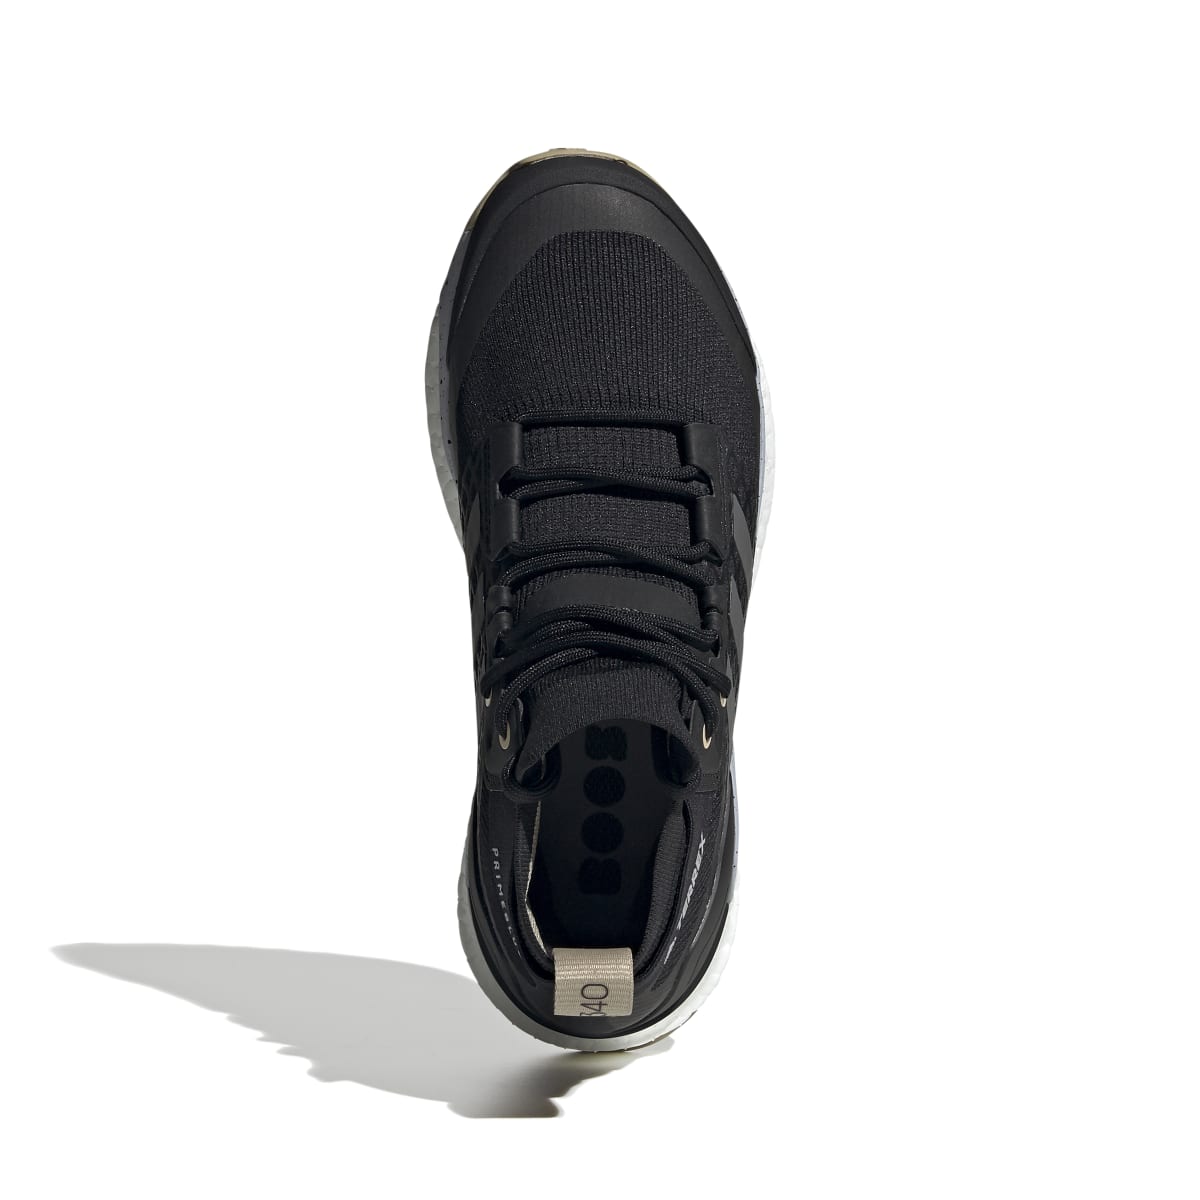 Adidas Terrex Swift R3 GTX Hiking Shoe Review | Switchback Travel